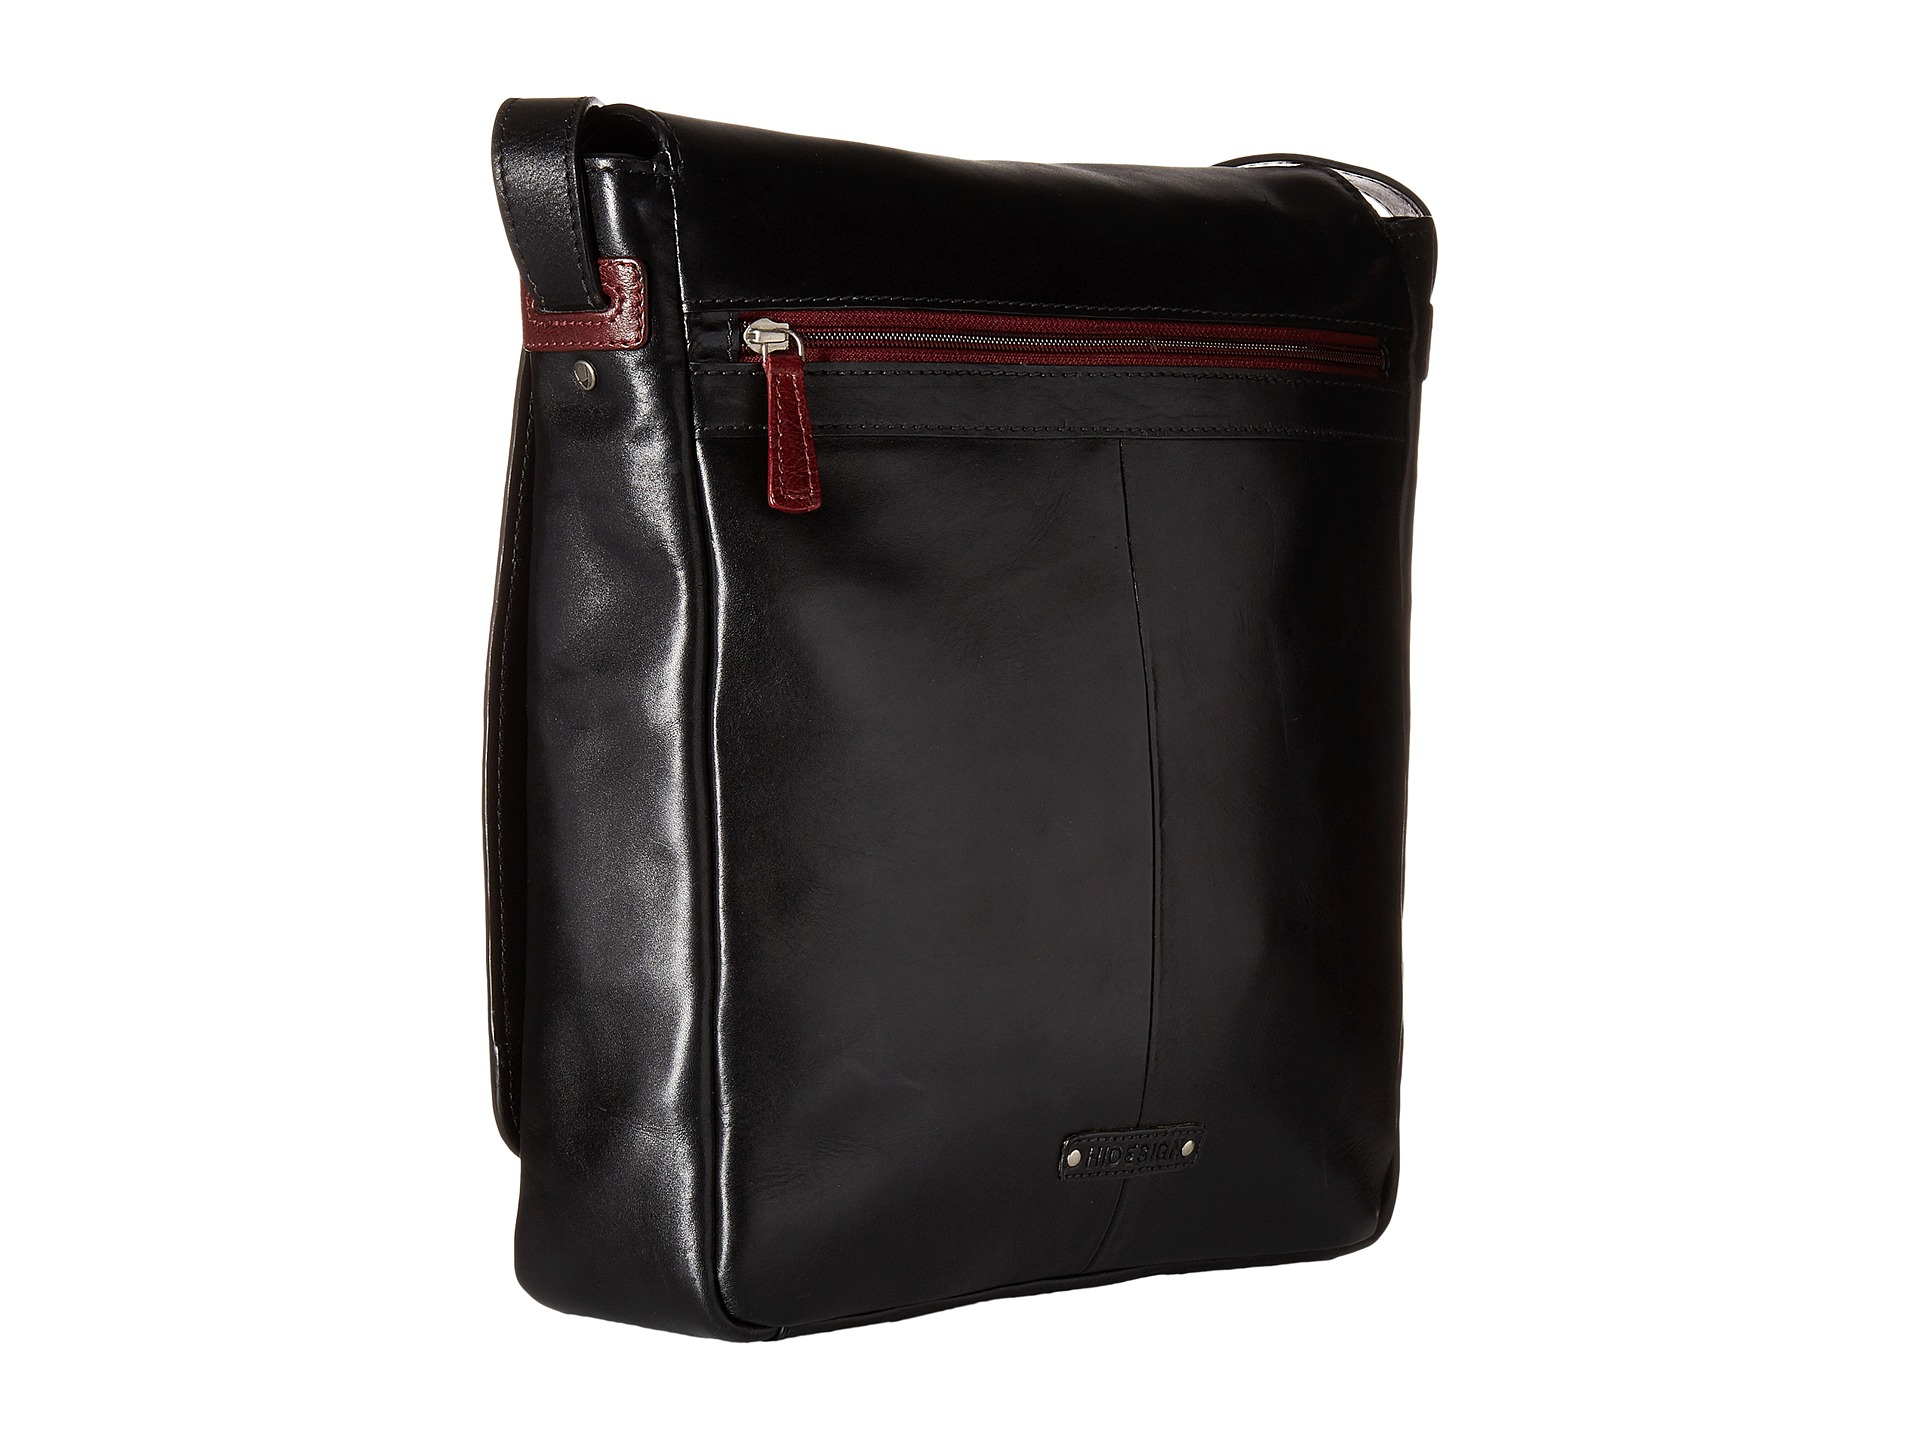 Lyst - Scully Hidesign Leather Upright Laptop Messenger Brief Bag in Black for Men